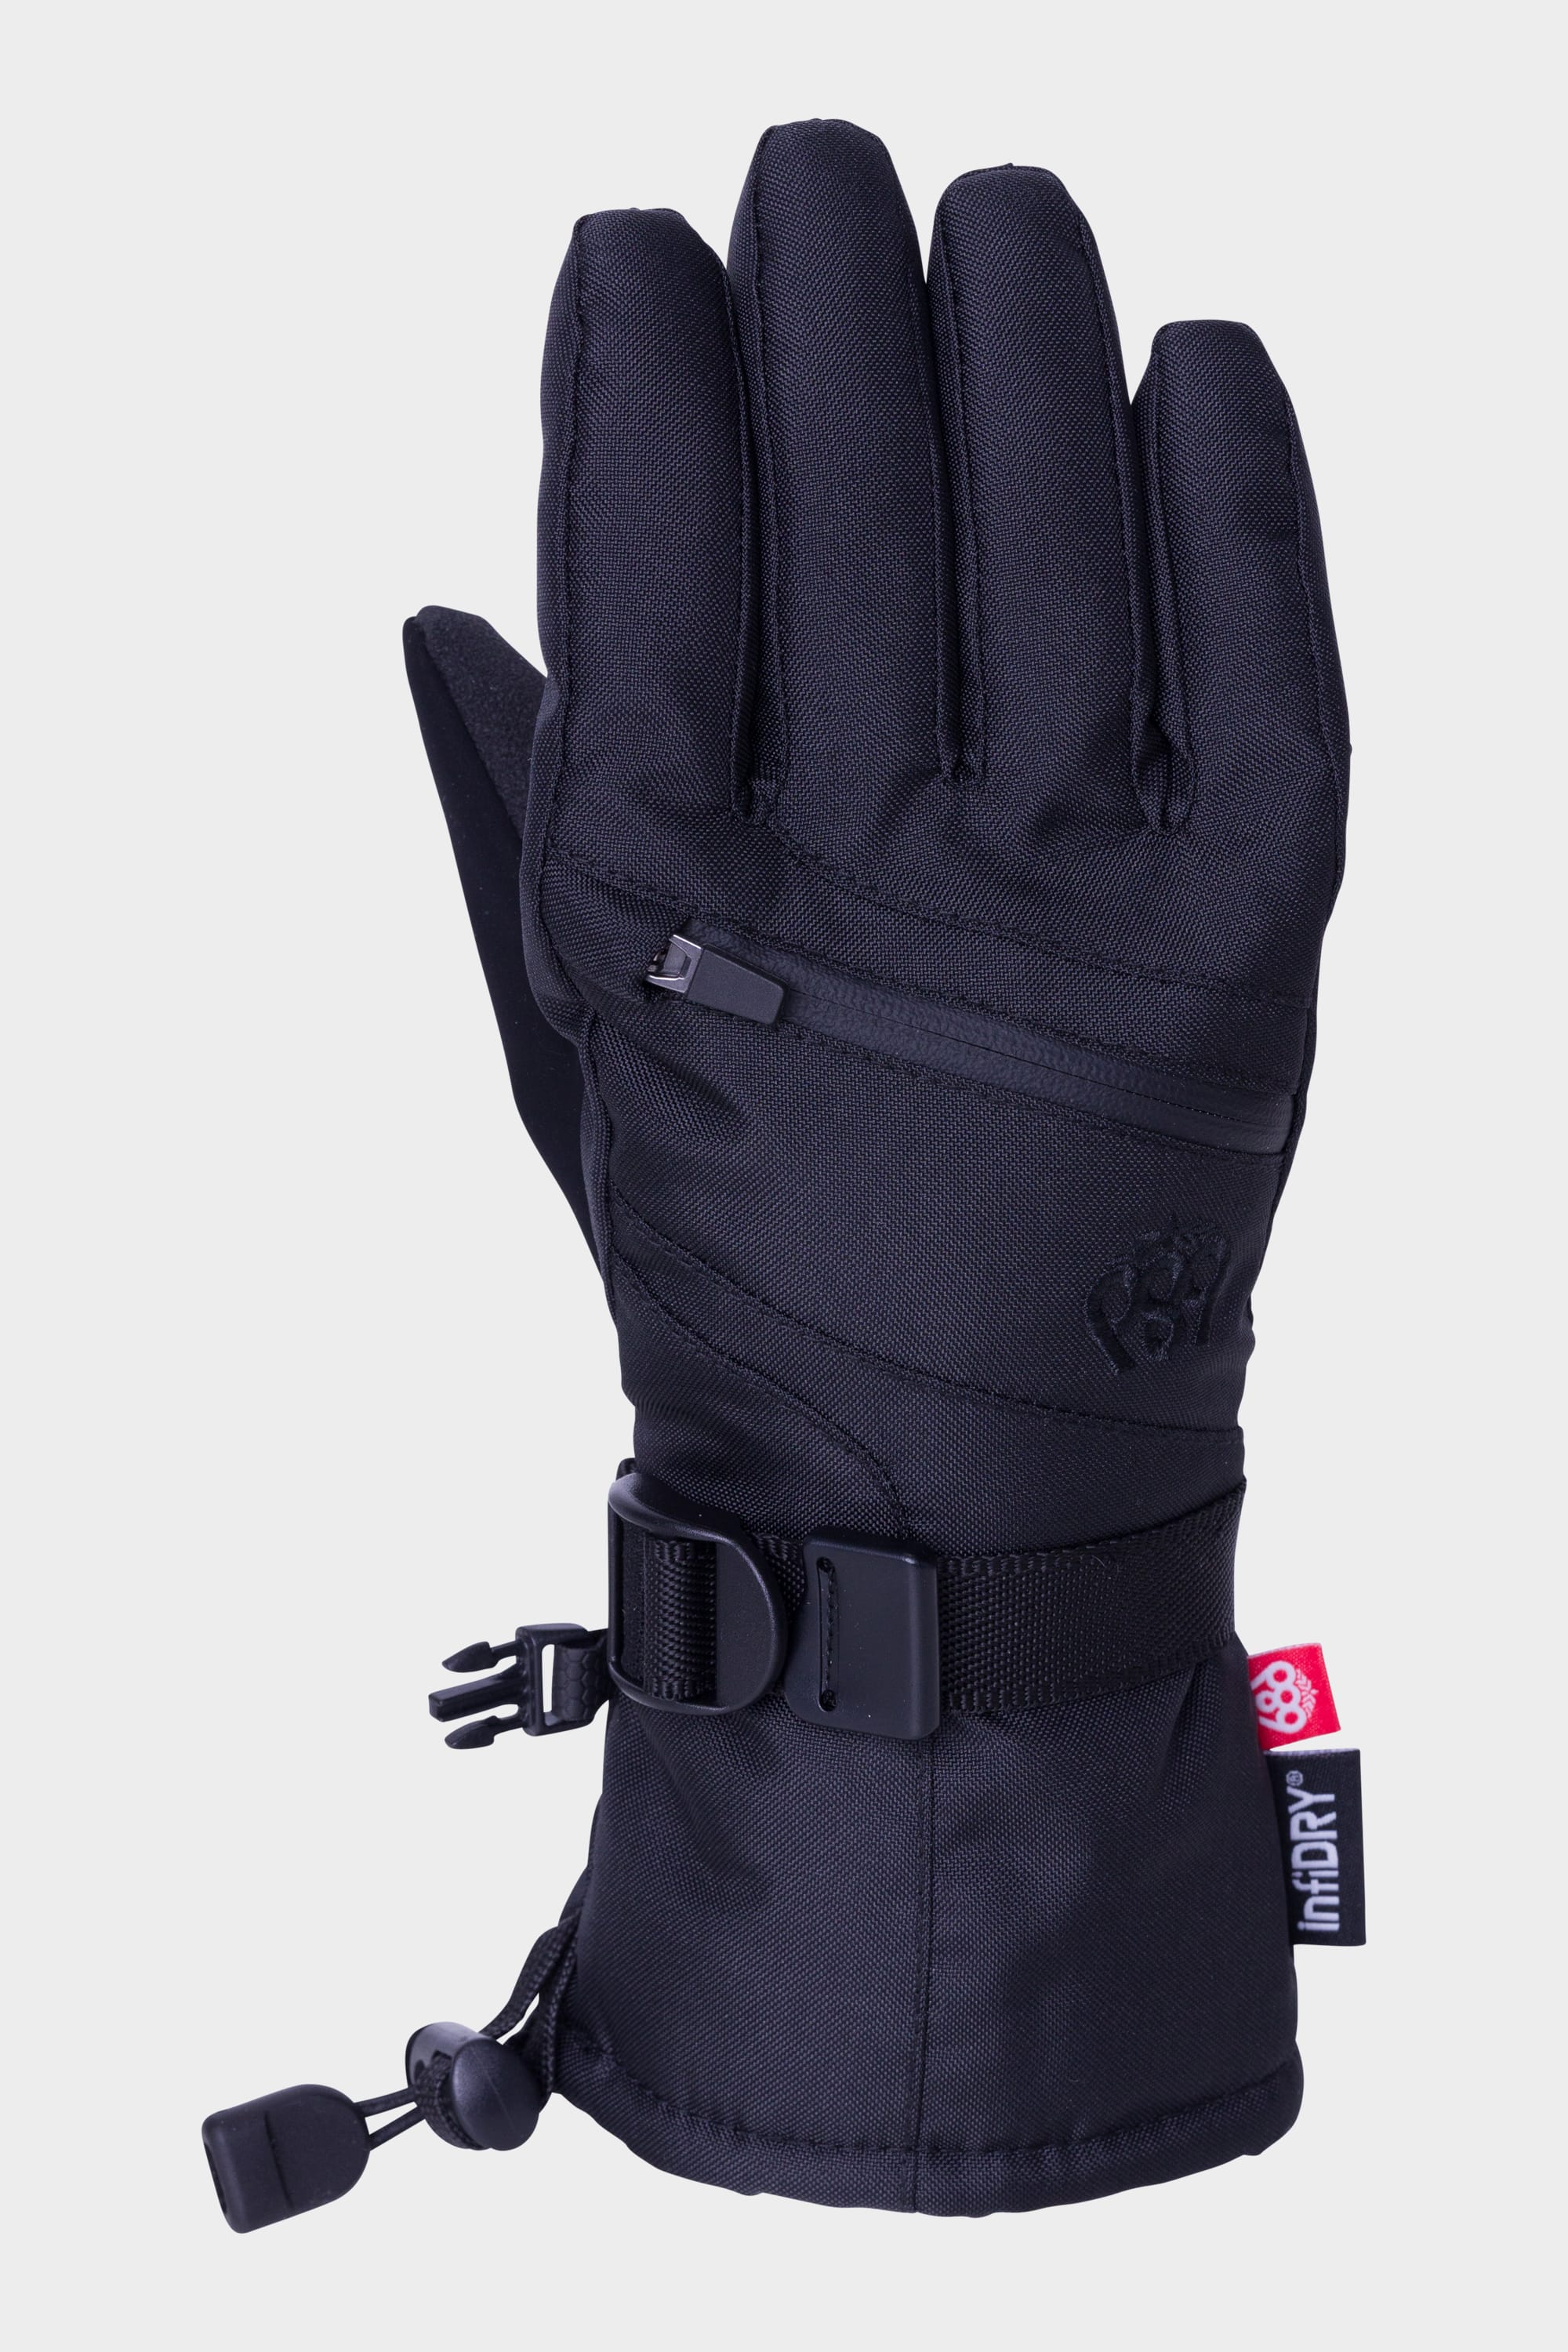 686 Heat Glove - Youth S Black